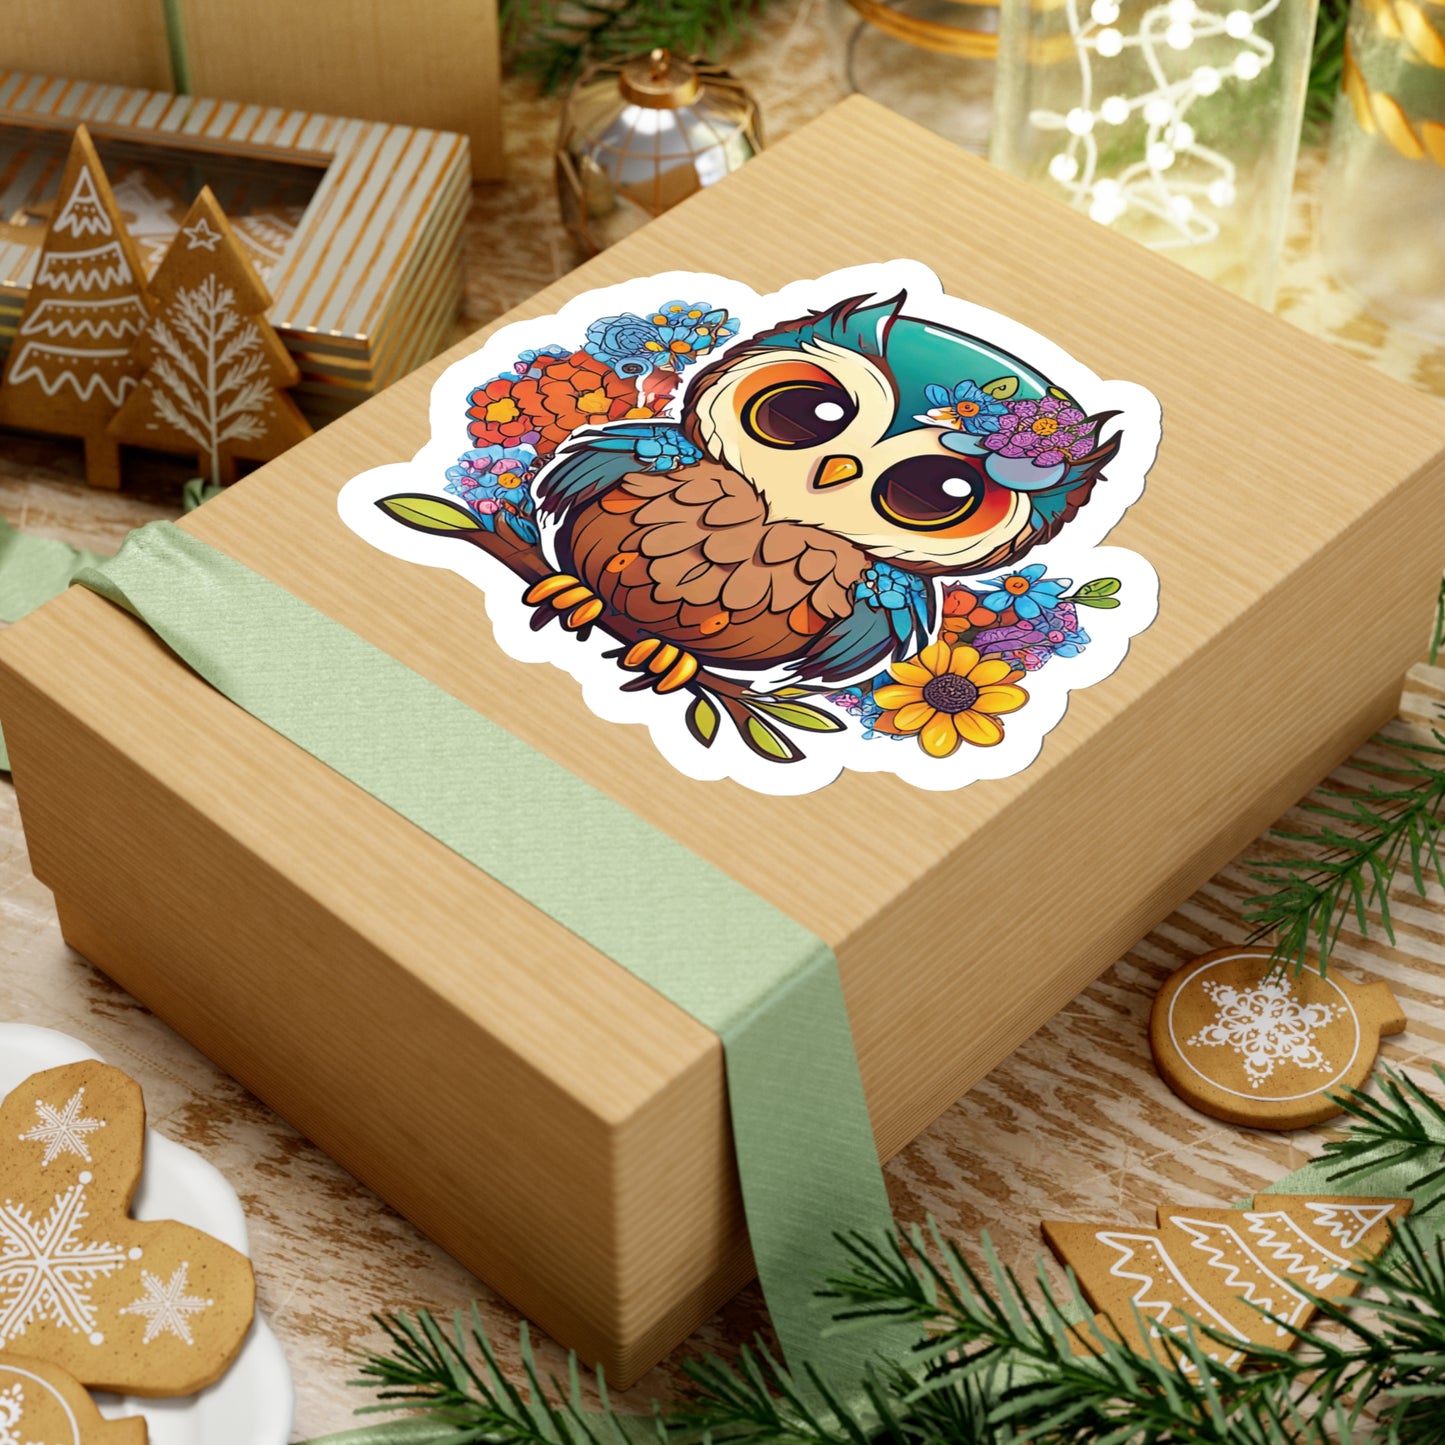 Chibi Owl Sticker Bright Colors | Fun Stickers | Happy Stickers | Must Have Stickers | Laptop Stickers | Best Stickers | Gift